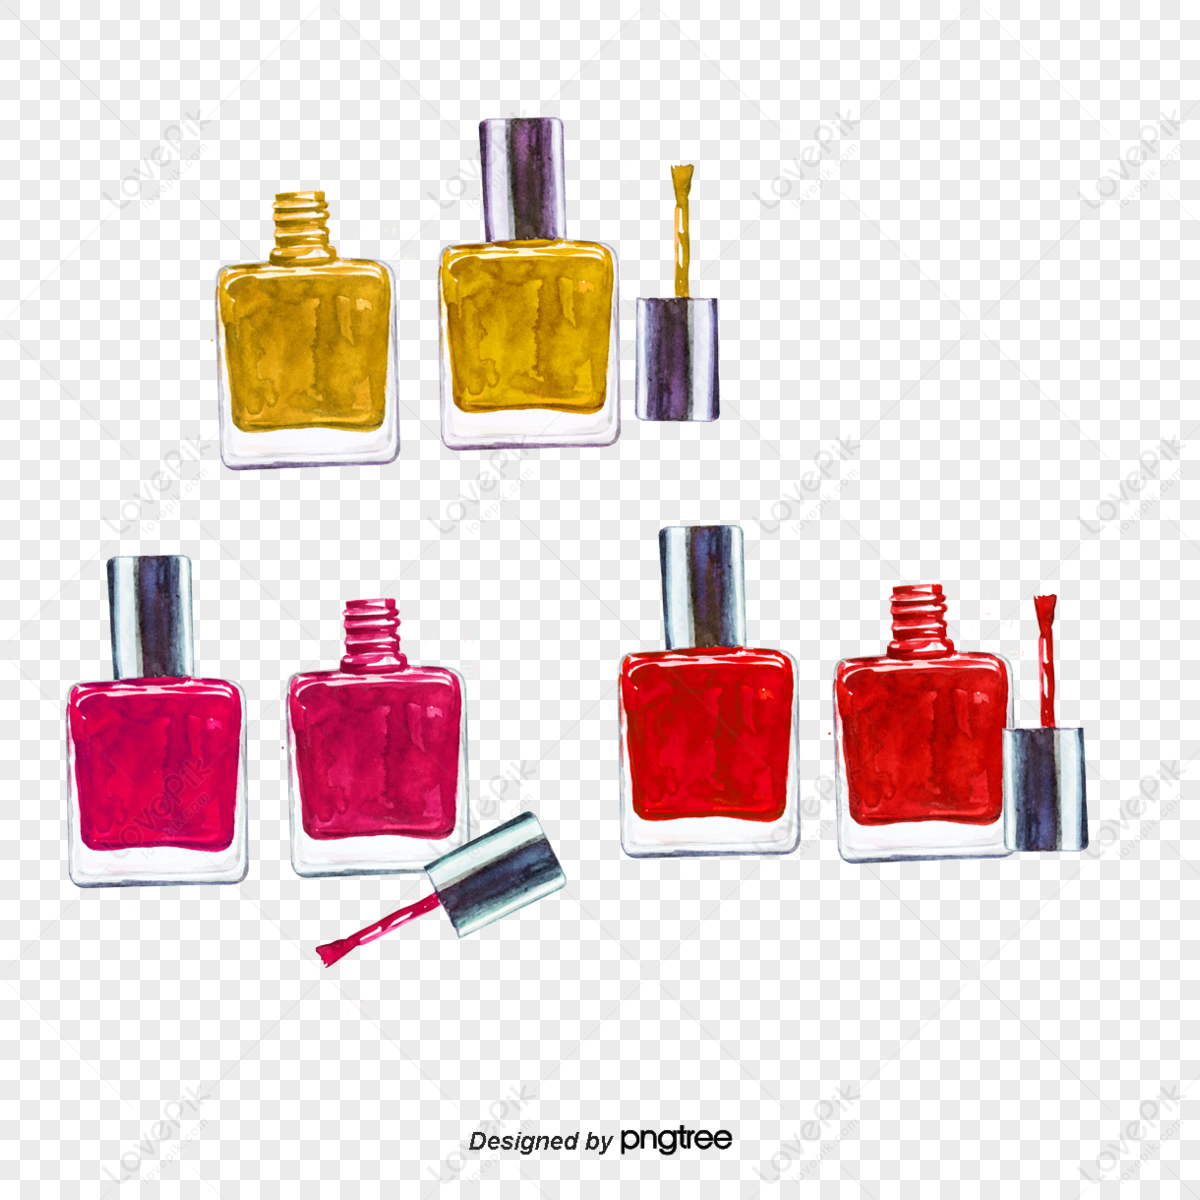 Nail color Vectors & Illustrations for Free Download | Freepik